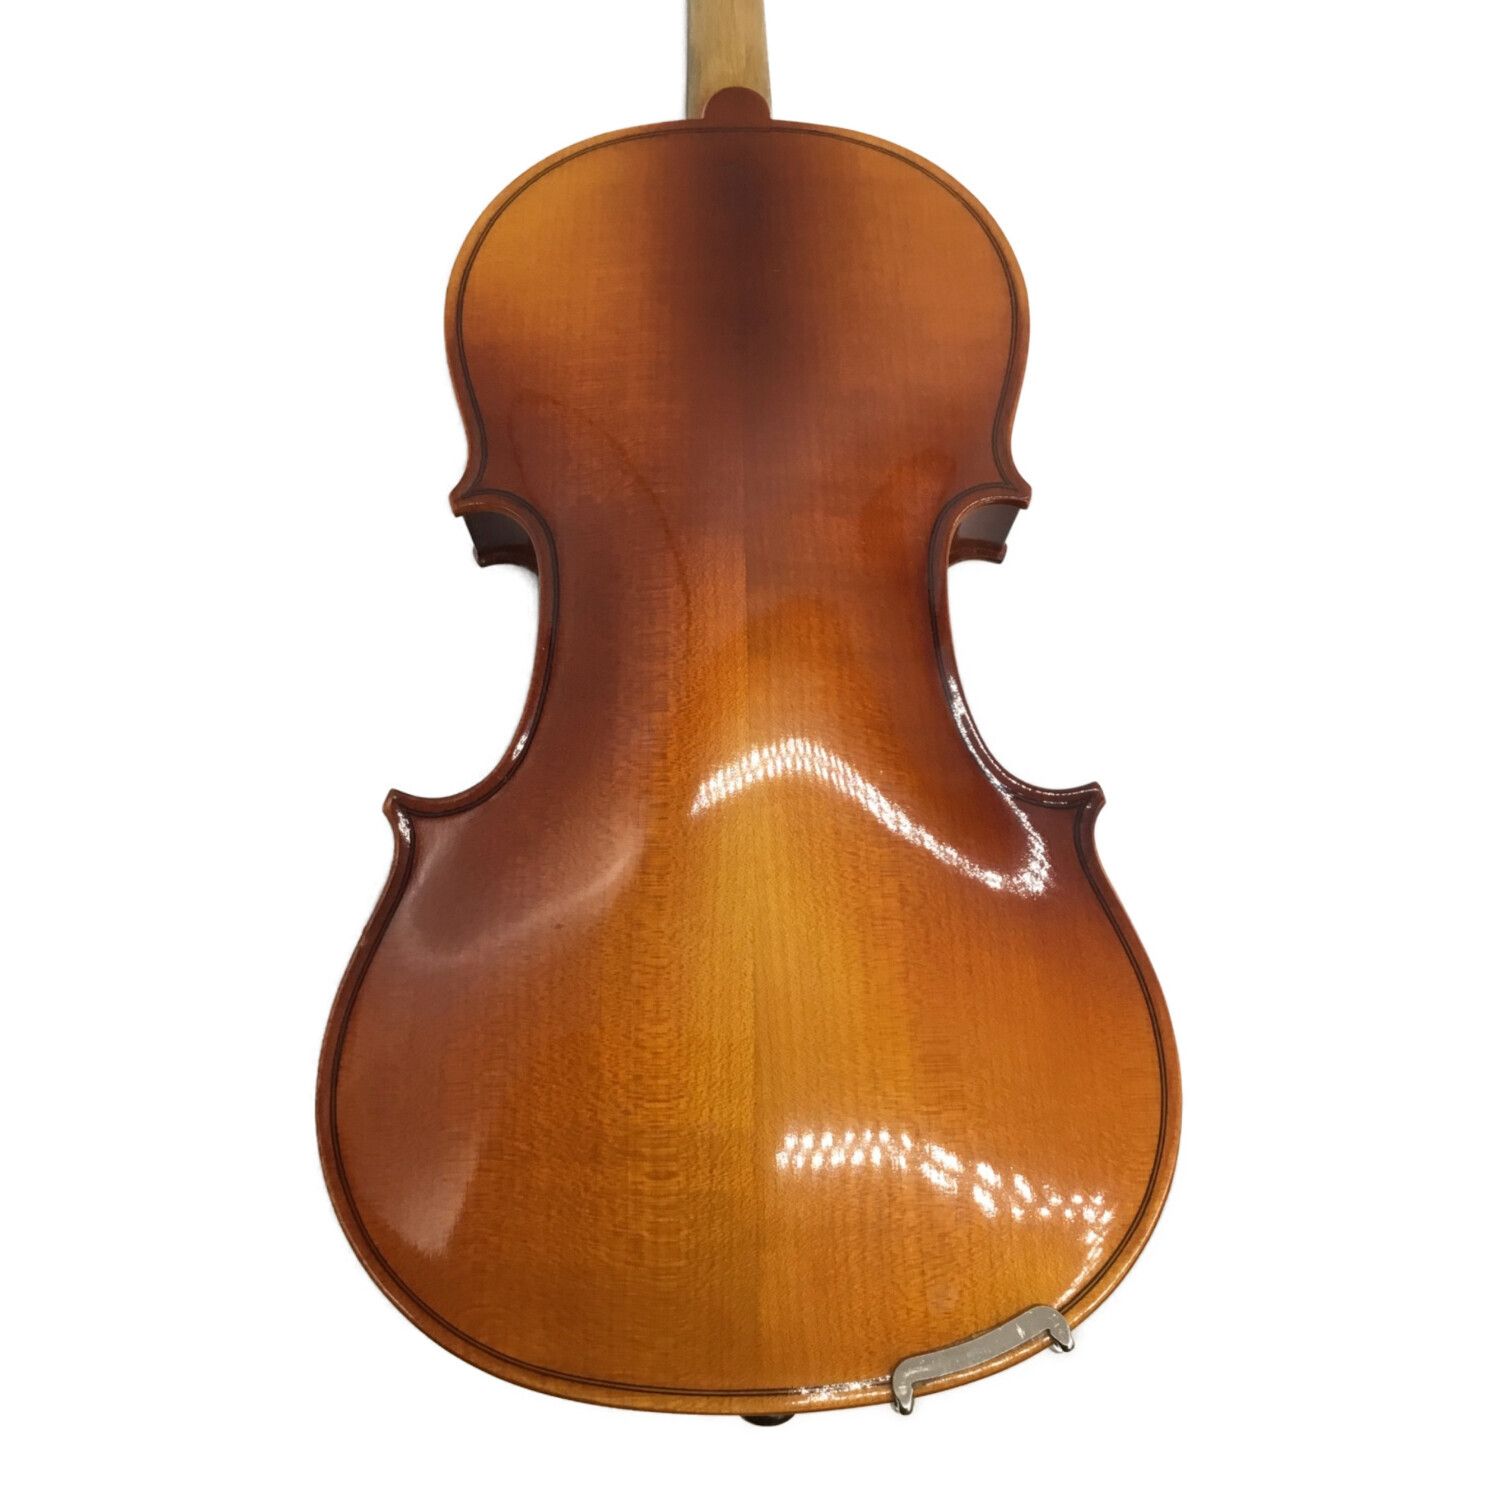 SUZUKI VIOLIN 鈴木バイオリン No.4 1/4バイオリン 1952年製 弓/ハード 